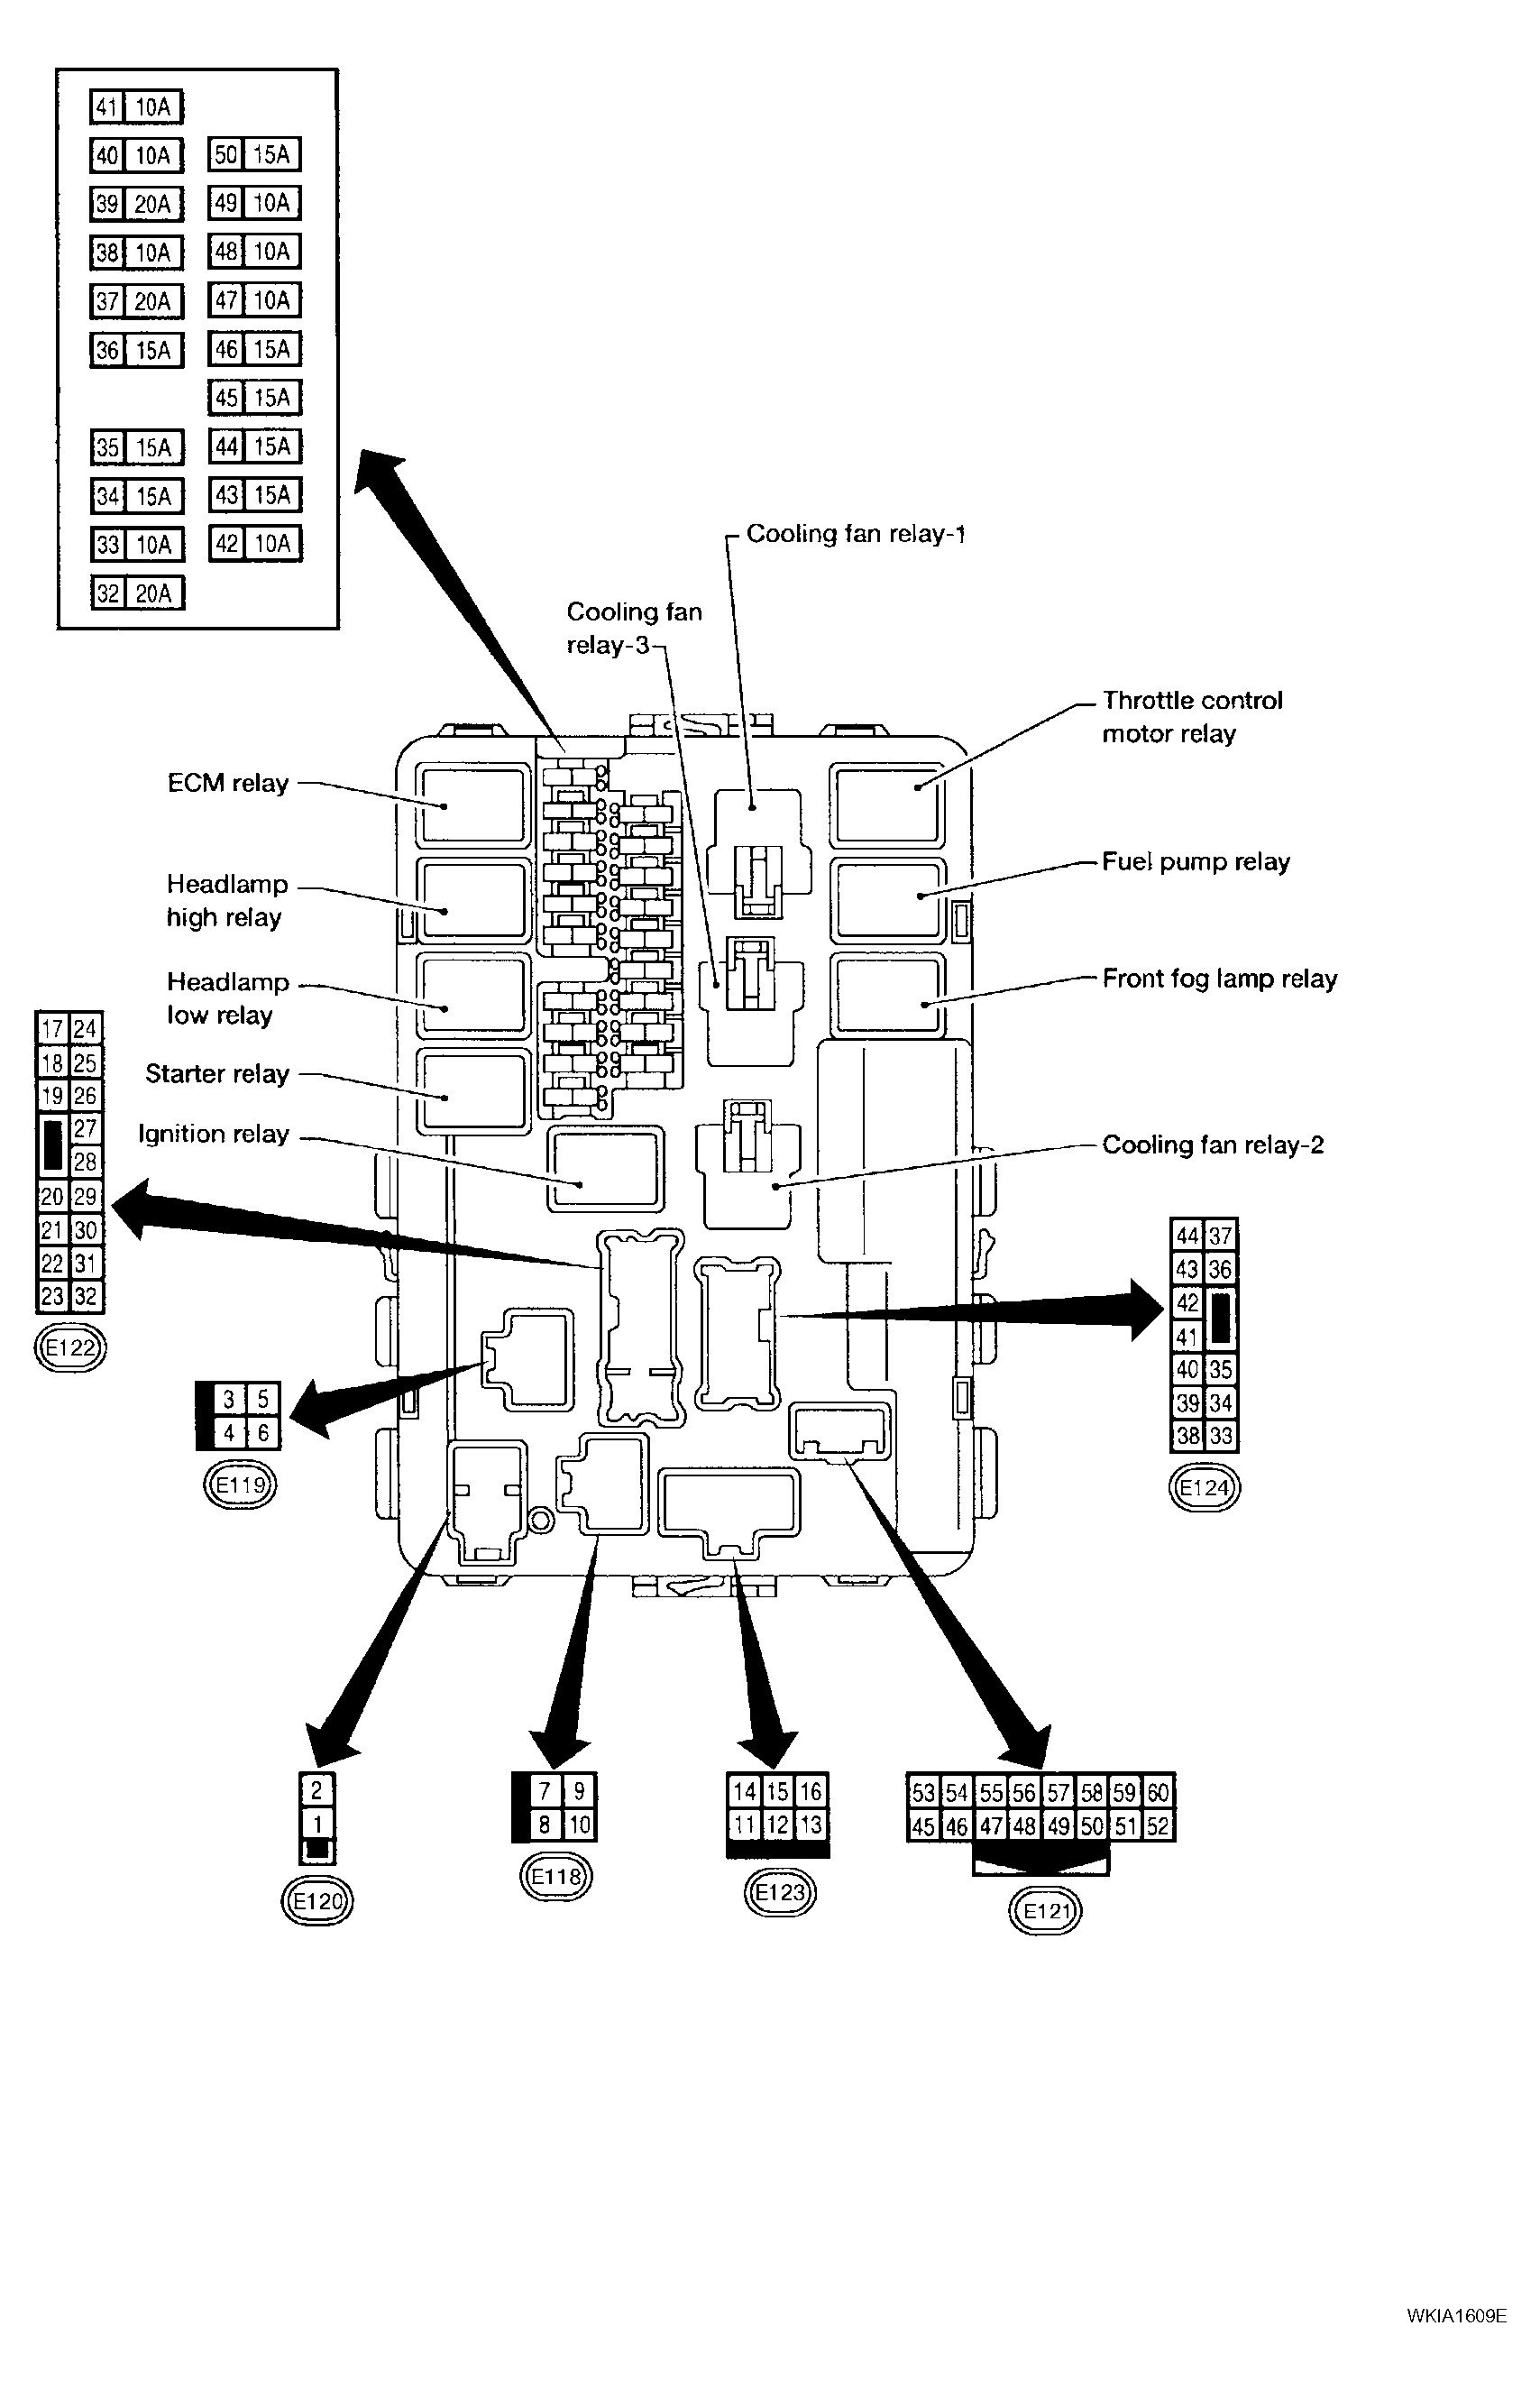 2007 Dodge Charger Engine Diagram : 2007 Dodge Charger Engine Diagram